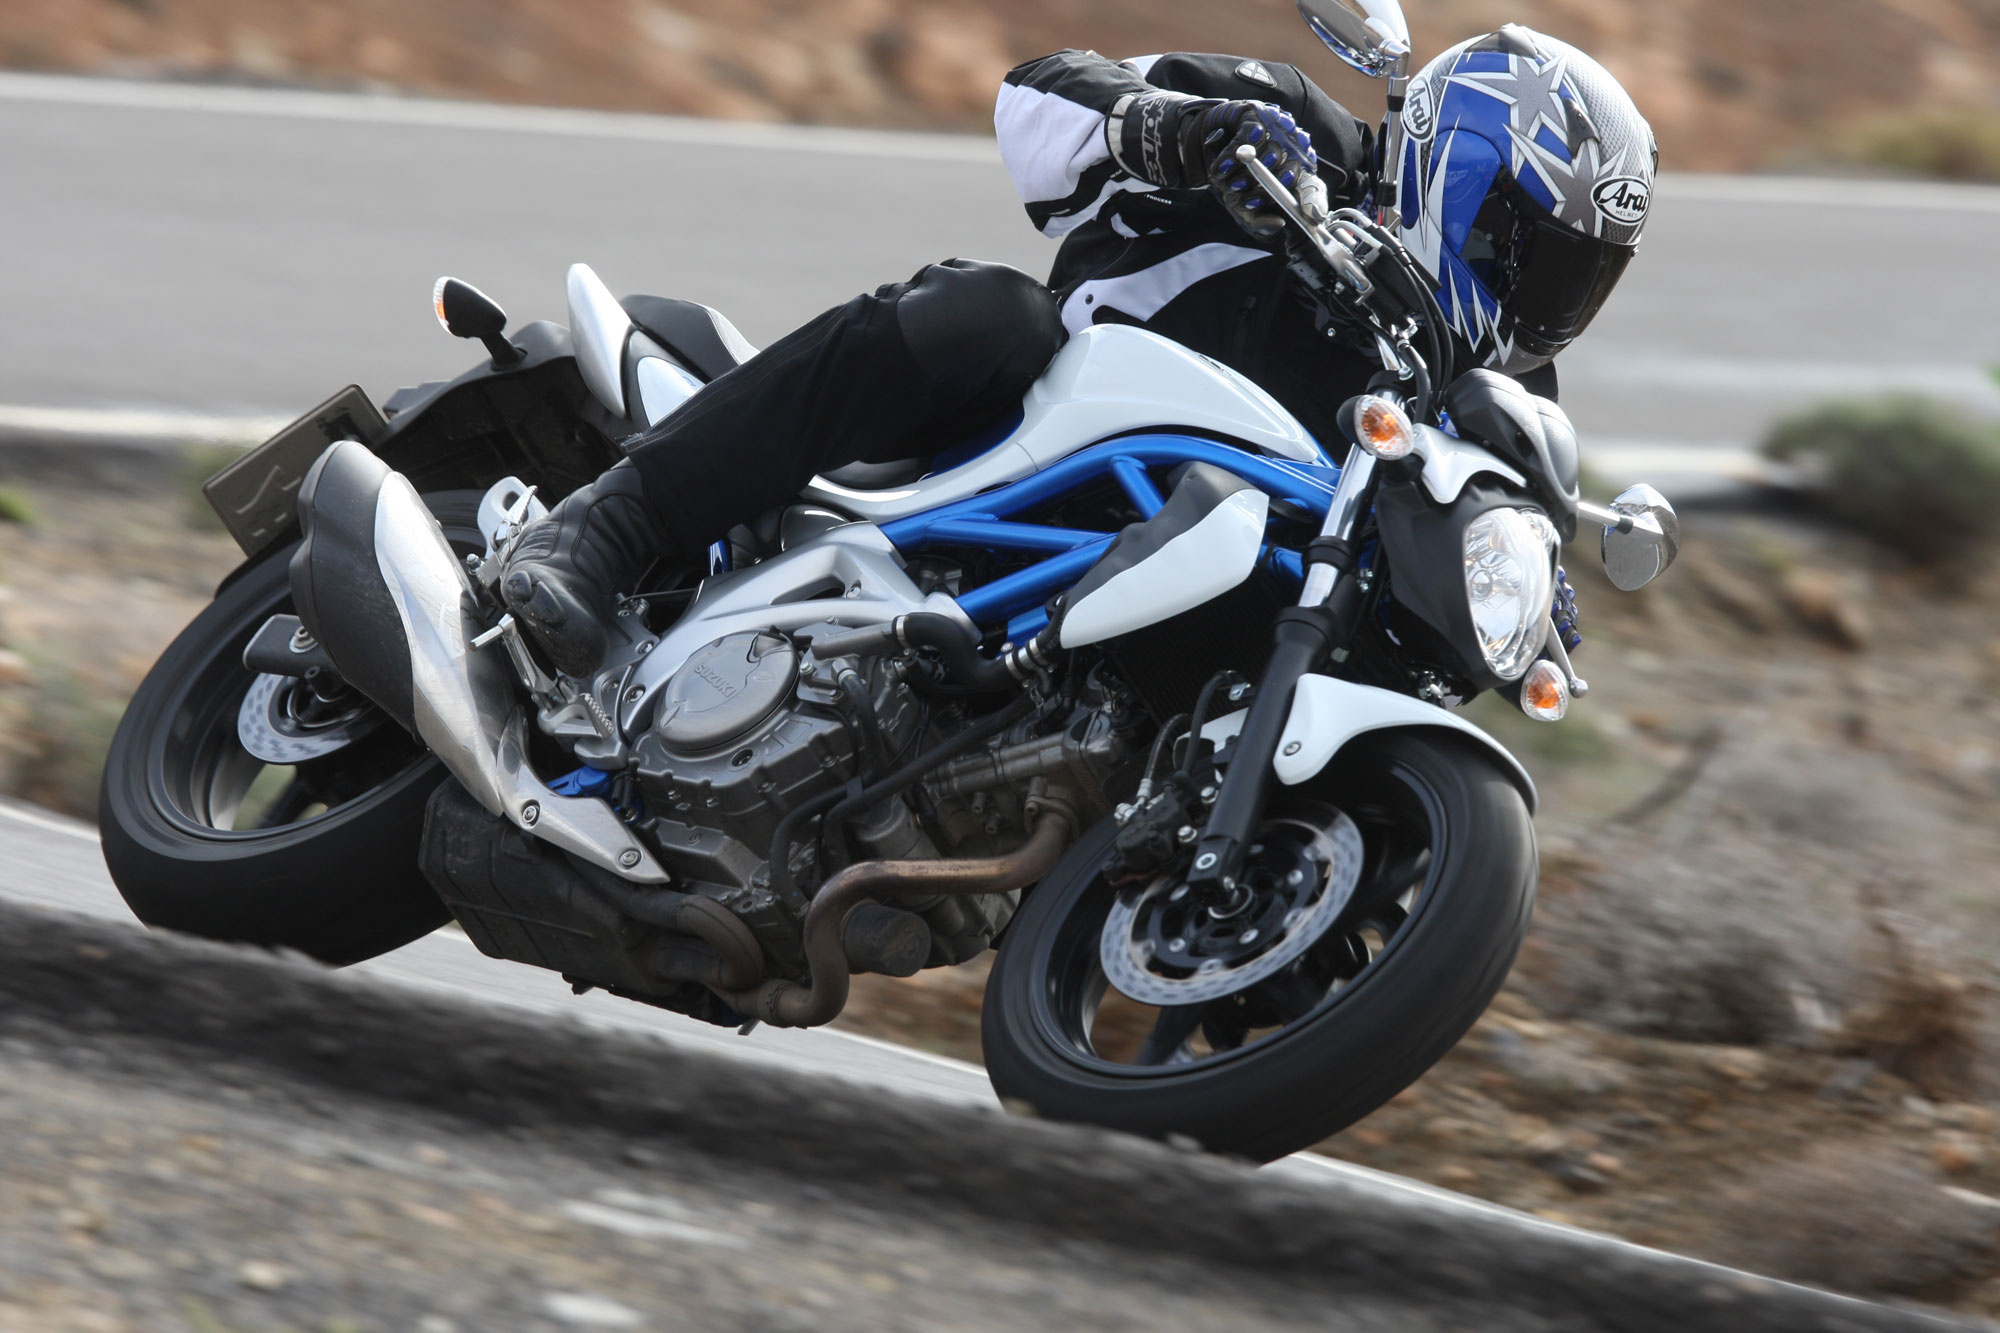 Suzuki SV650, Dynamic motorcycle images, Auto expert, Free downloads, 2000x1340 HD Desktop